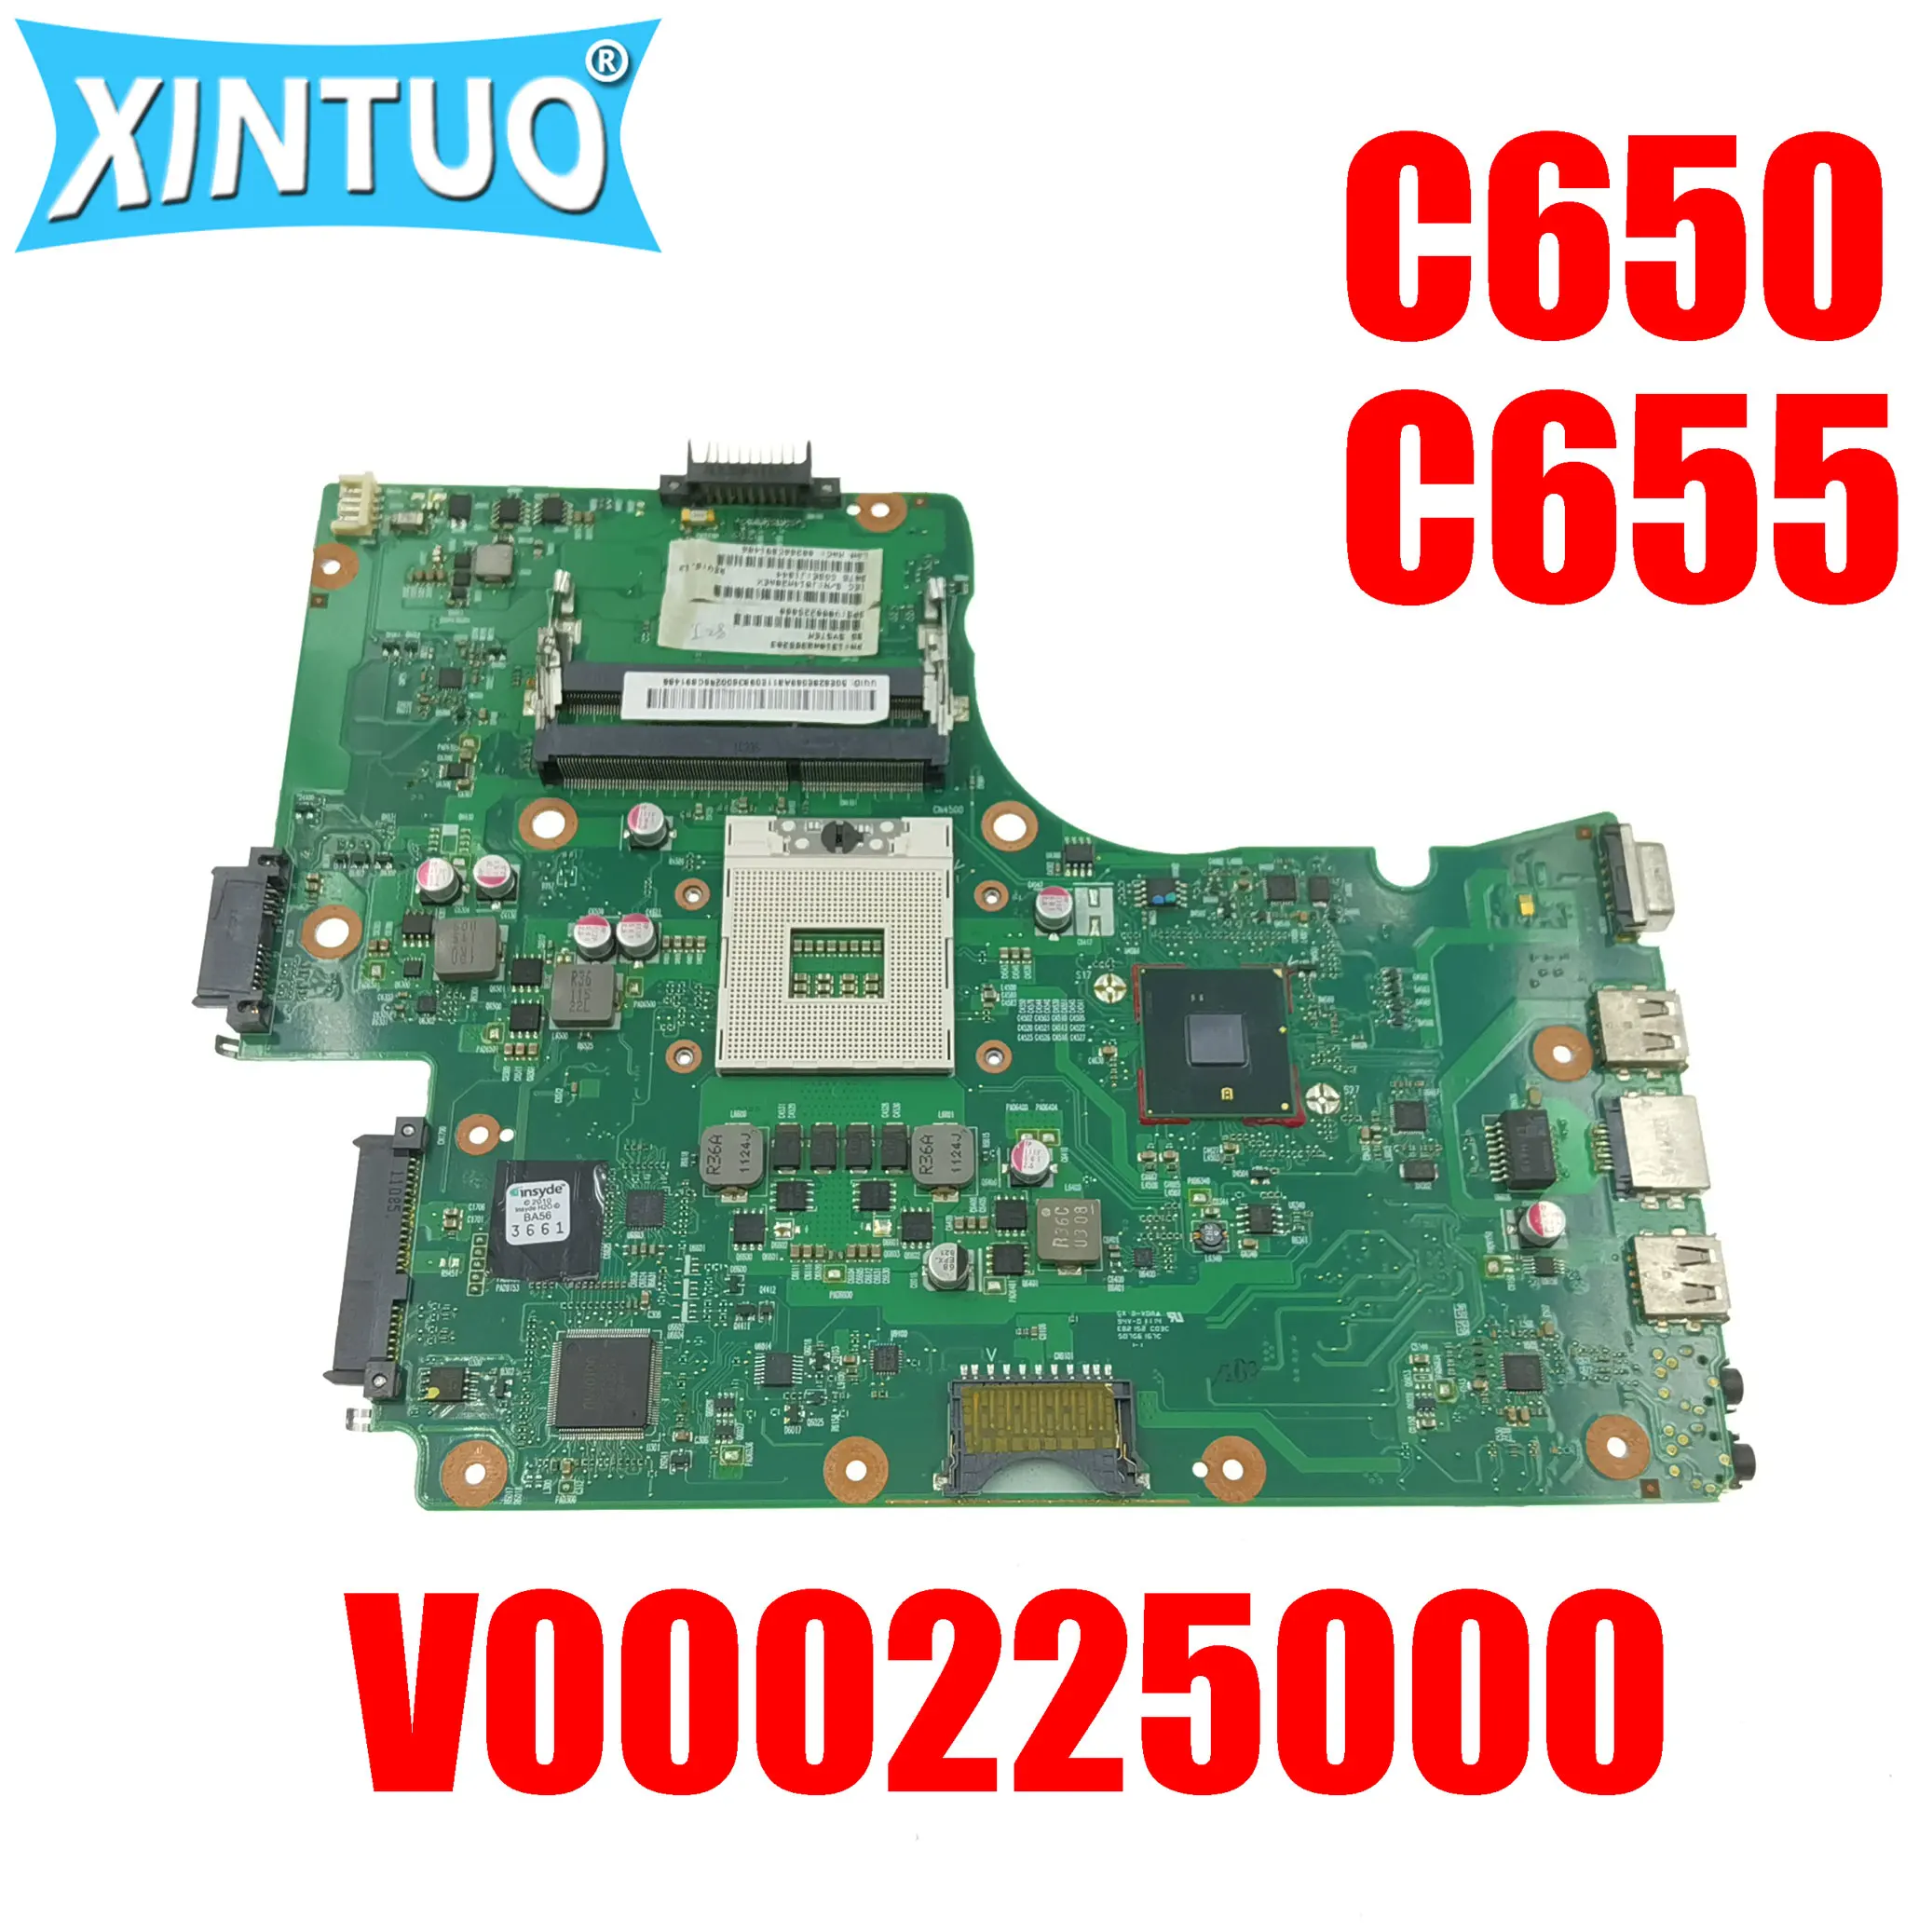 

V000225000 laptop motherboard for Toshiba Satellite C650 C655 laptop motherboard 6050A2355202-MB-A03-T1 HM55 DDR3 100% test work